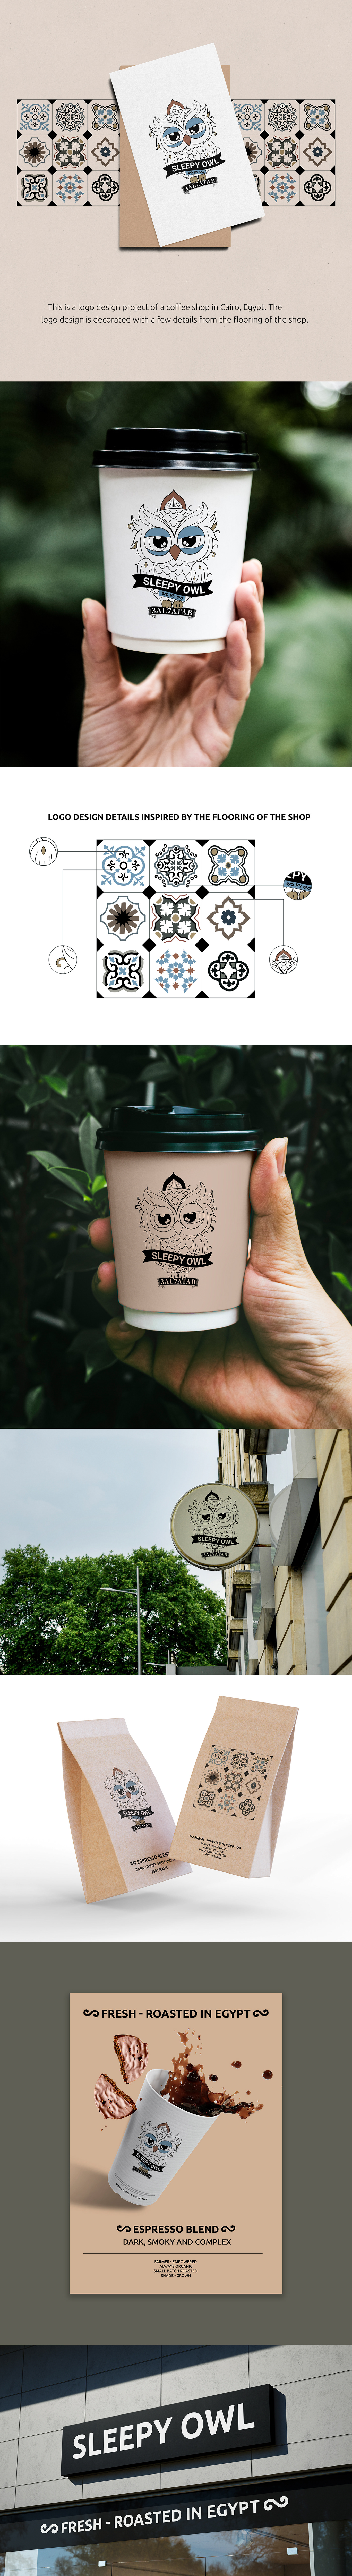 logodesign logo cup pattern bag Coffee coffeshop poster sign owl